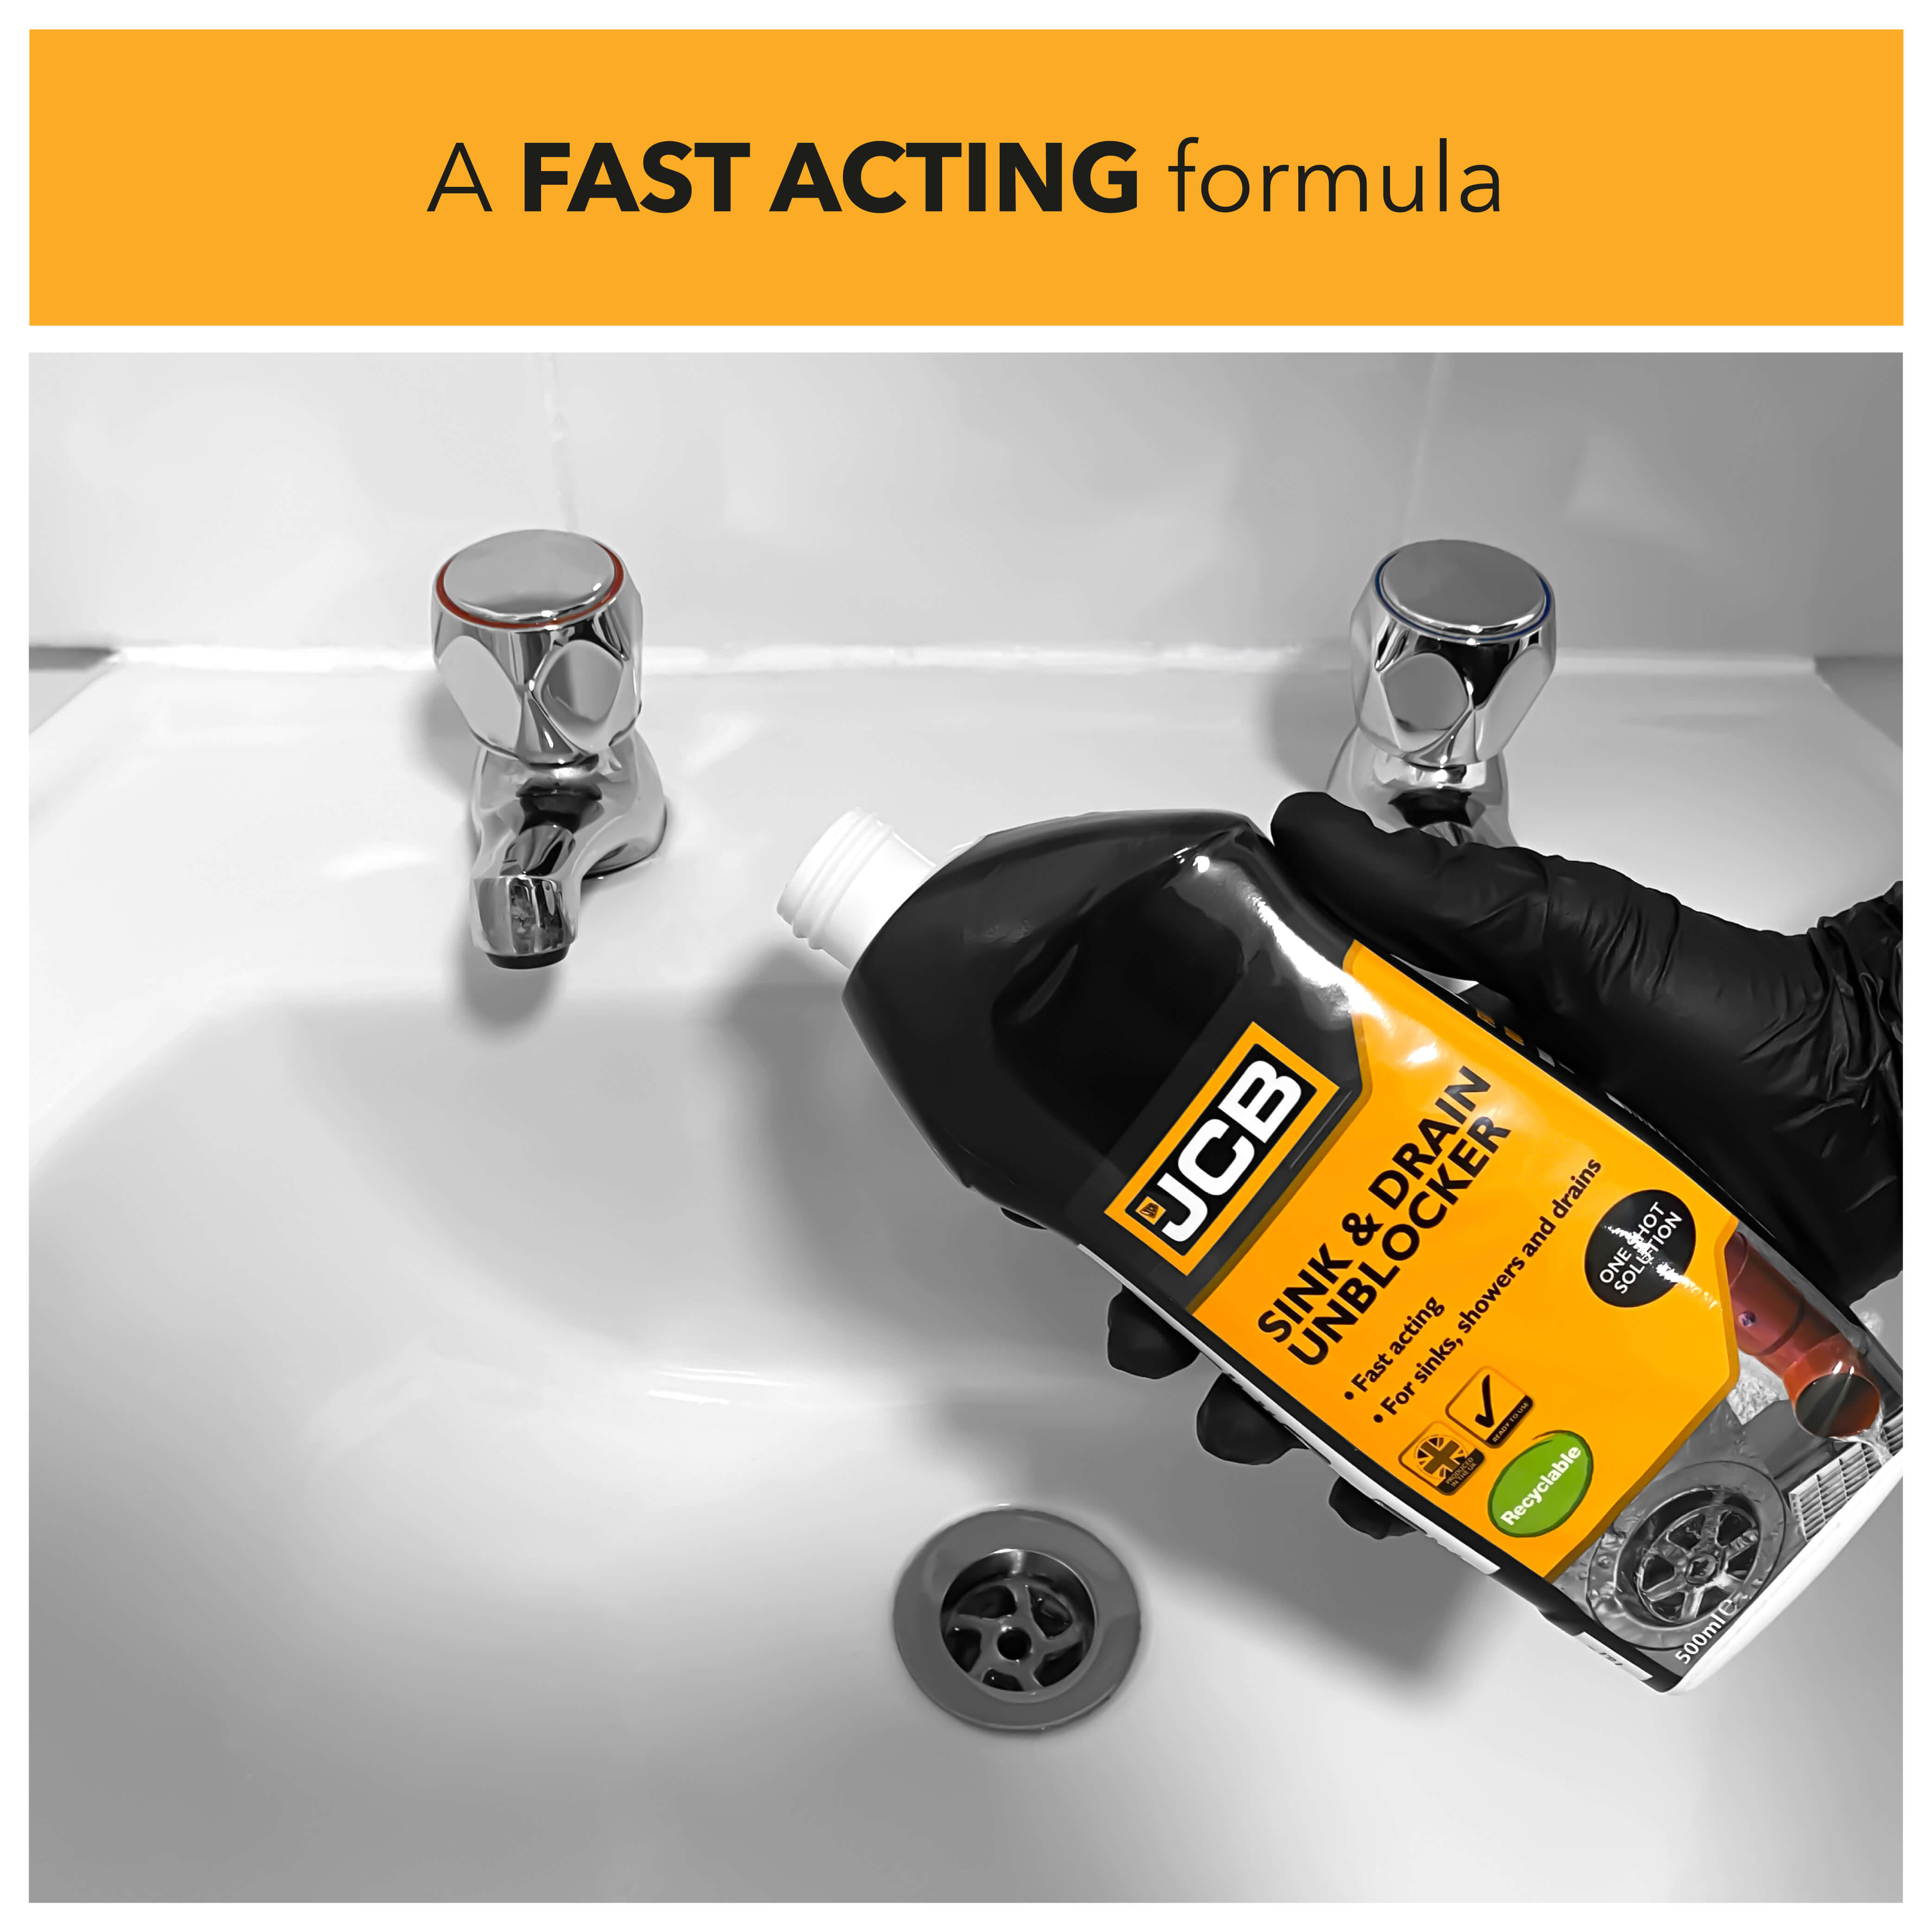 A fast acting formula